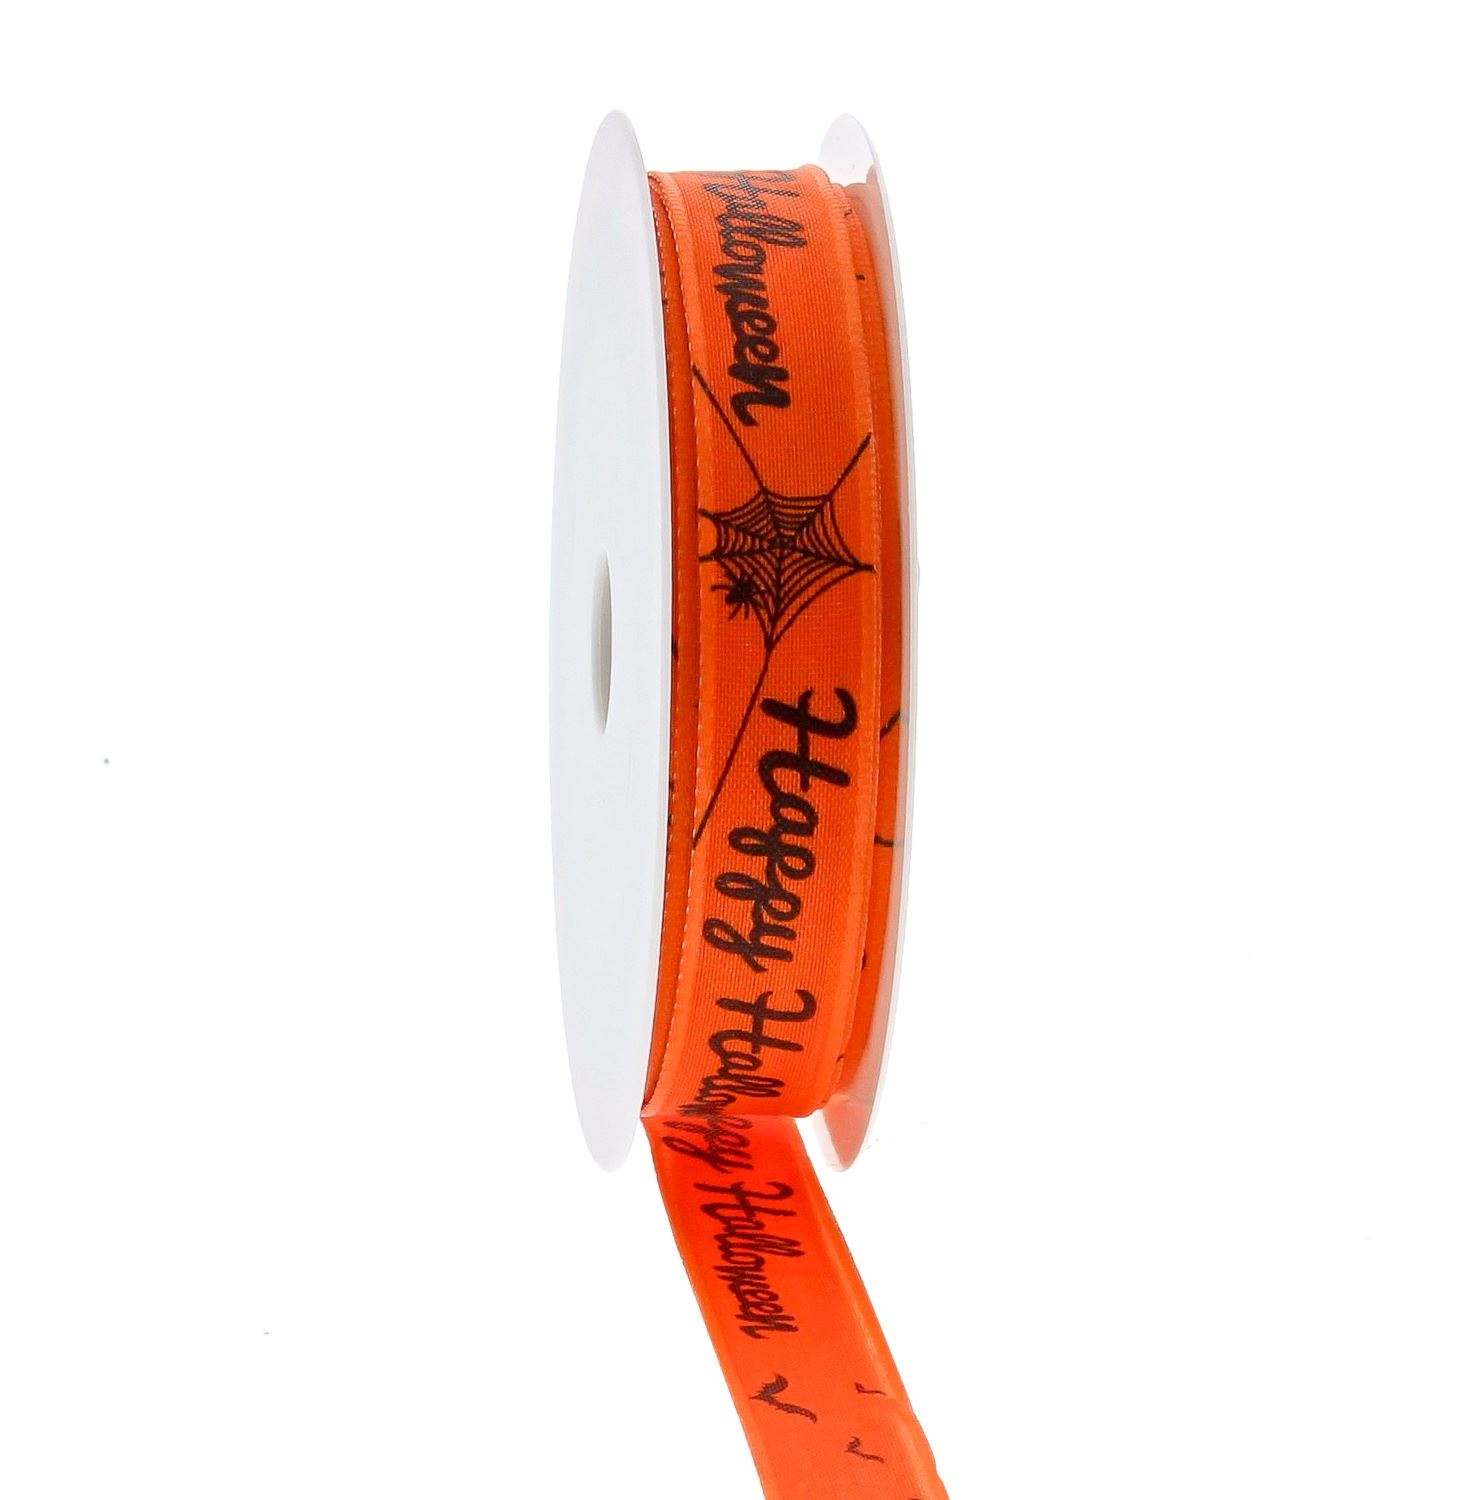 Ribbon with wire scene "Happy Halloween" - orange - 15mm x 20m